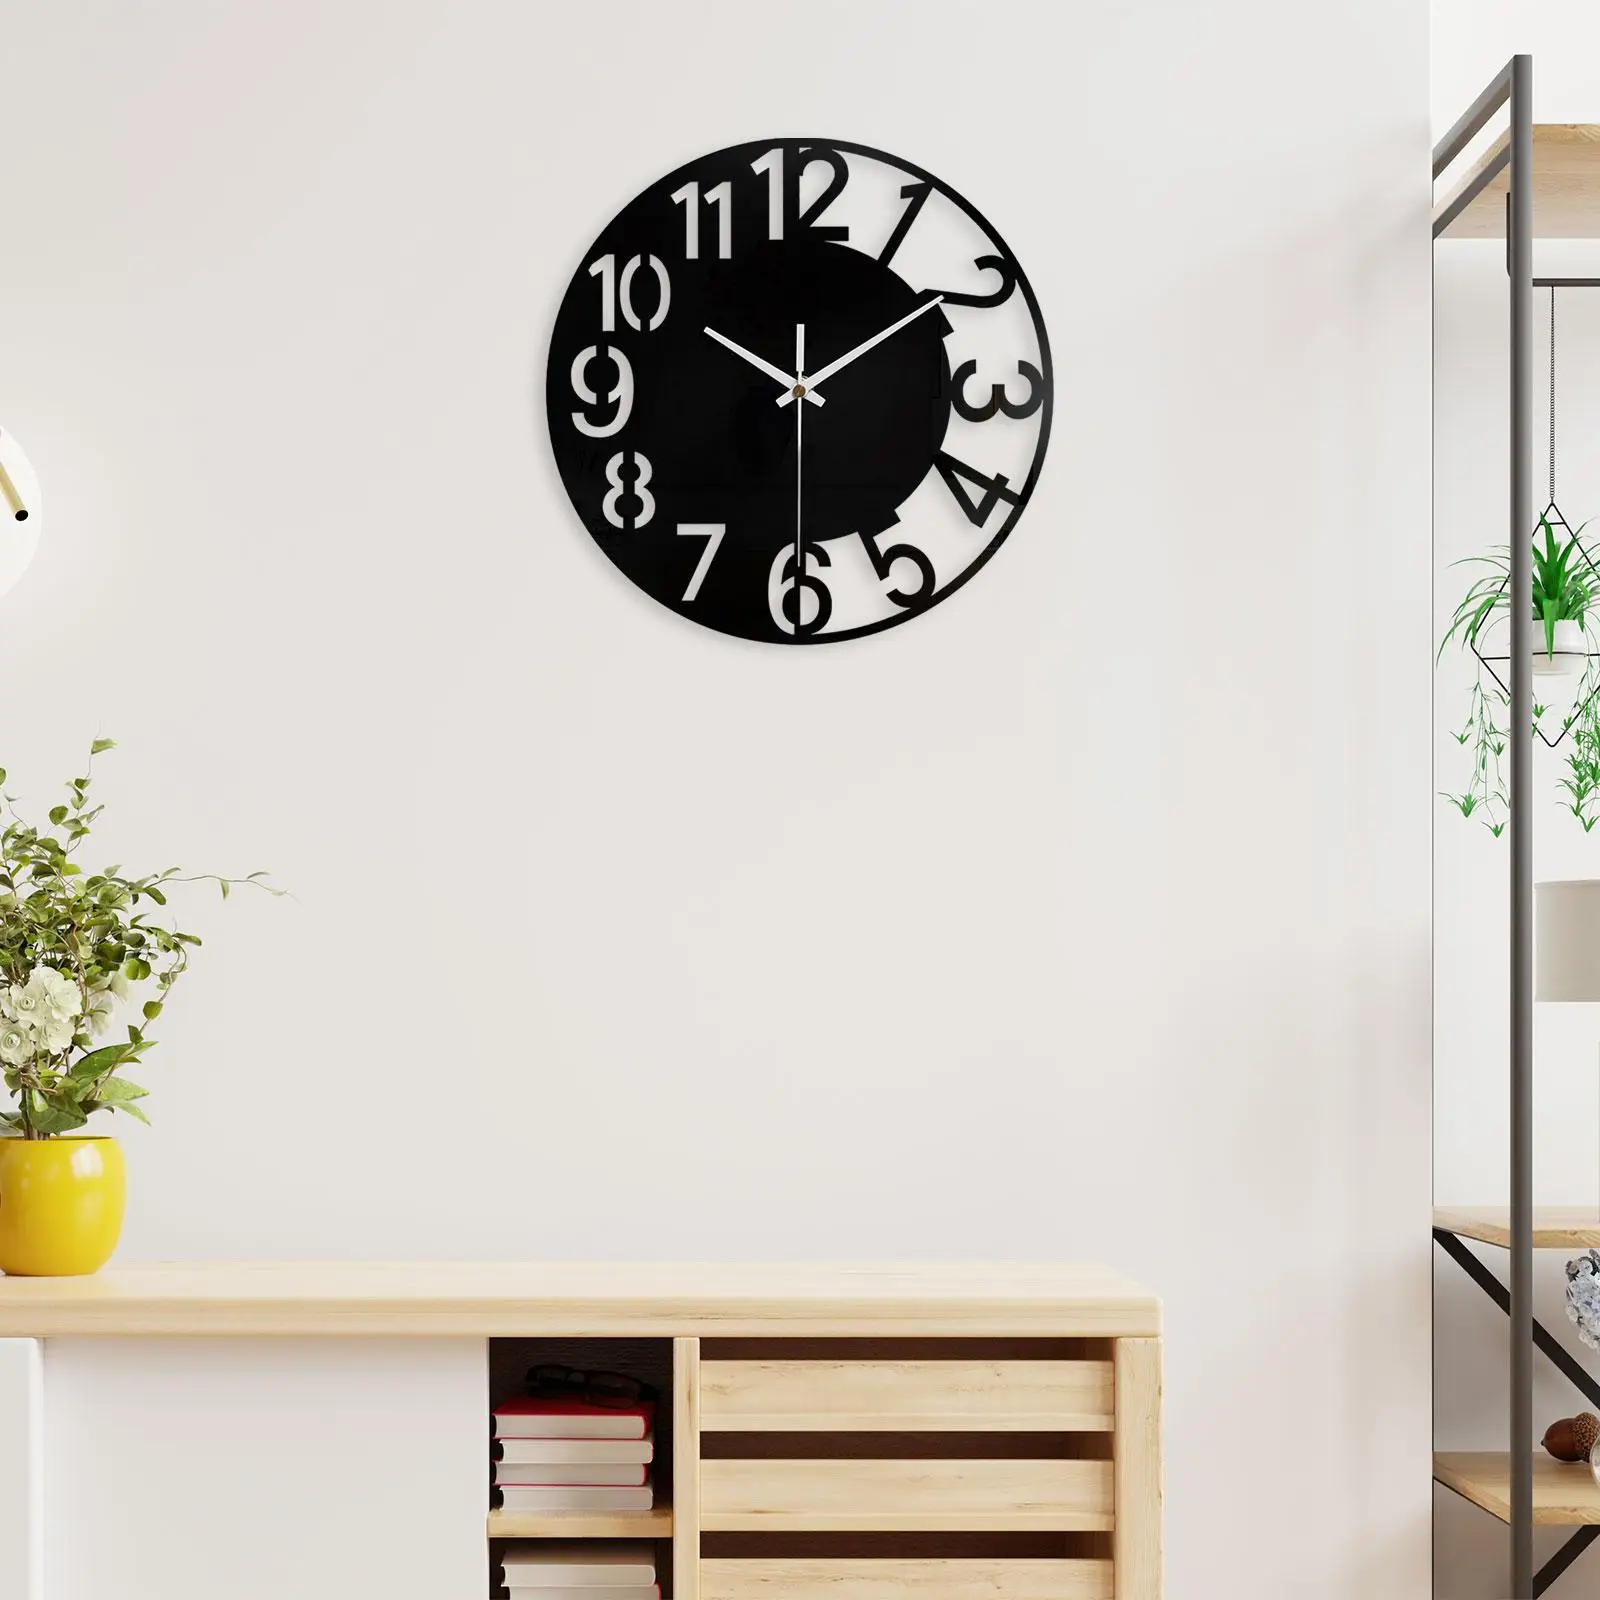 Acrylic Wall Clock Modern Style Large Wall Clock for Office Bedroom Bathroom